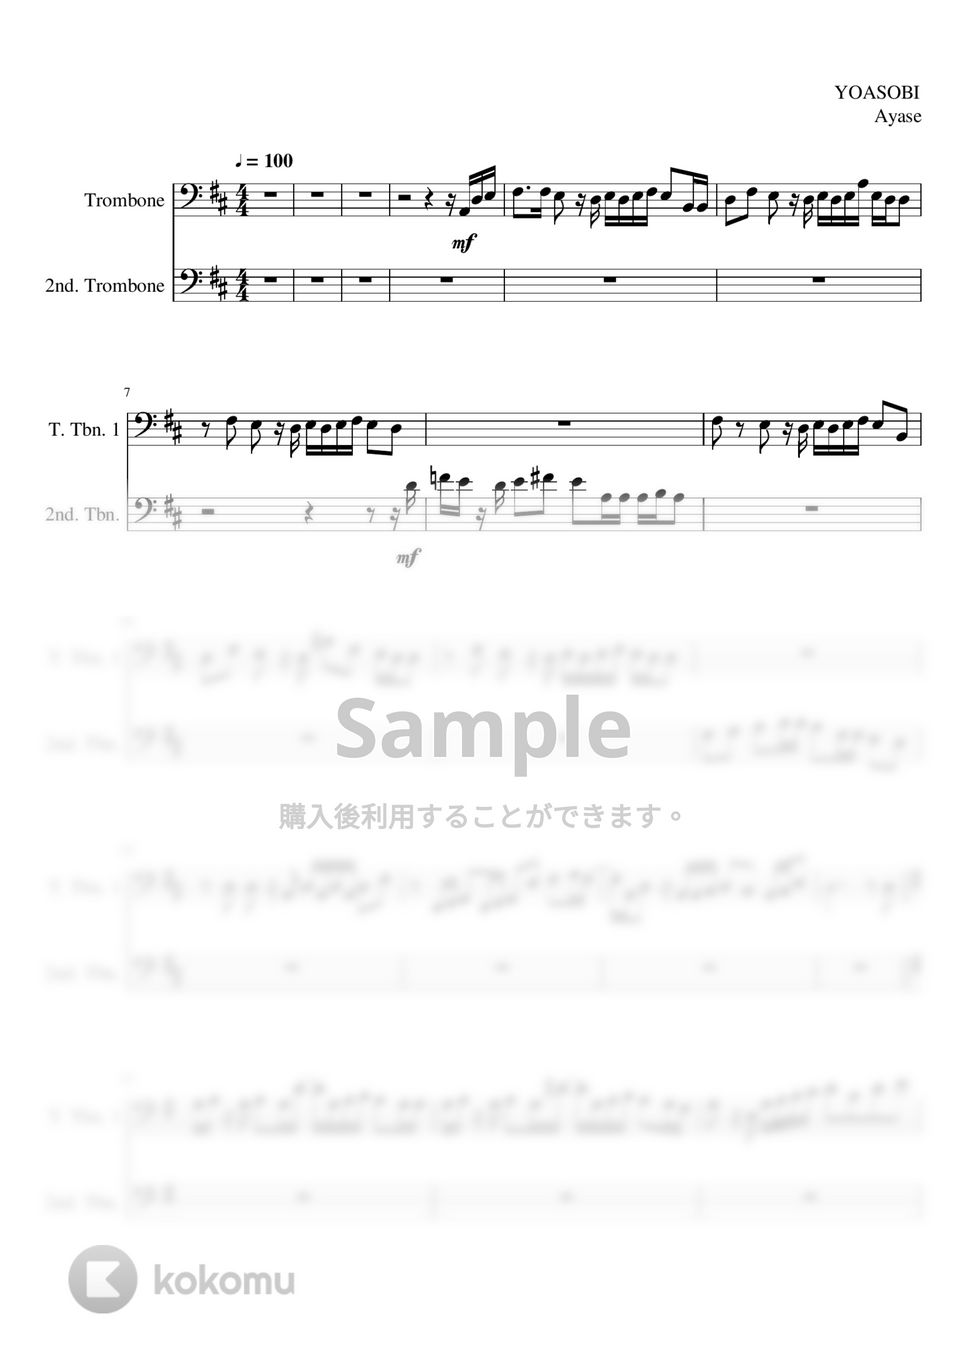 YOASOBI - ラブレター (-Trombone Solo- 原キー) by Creampuff